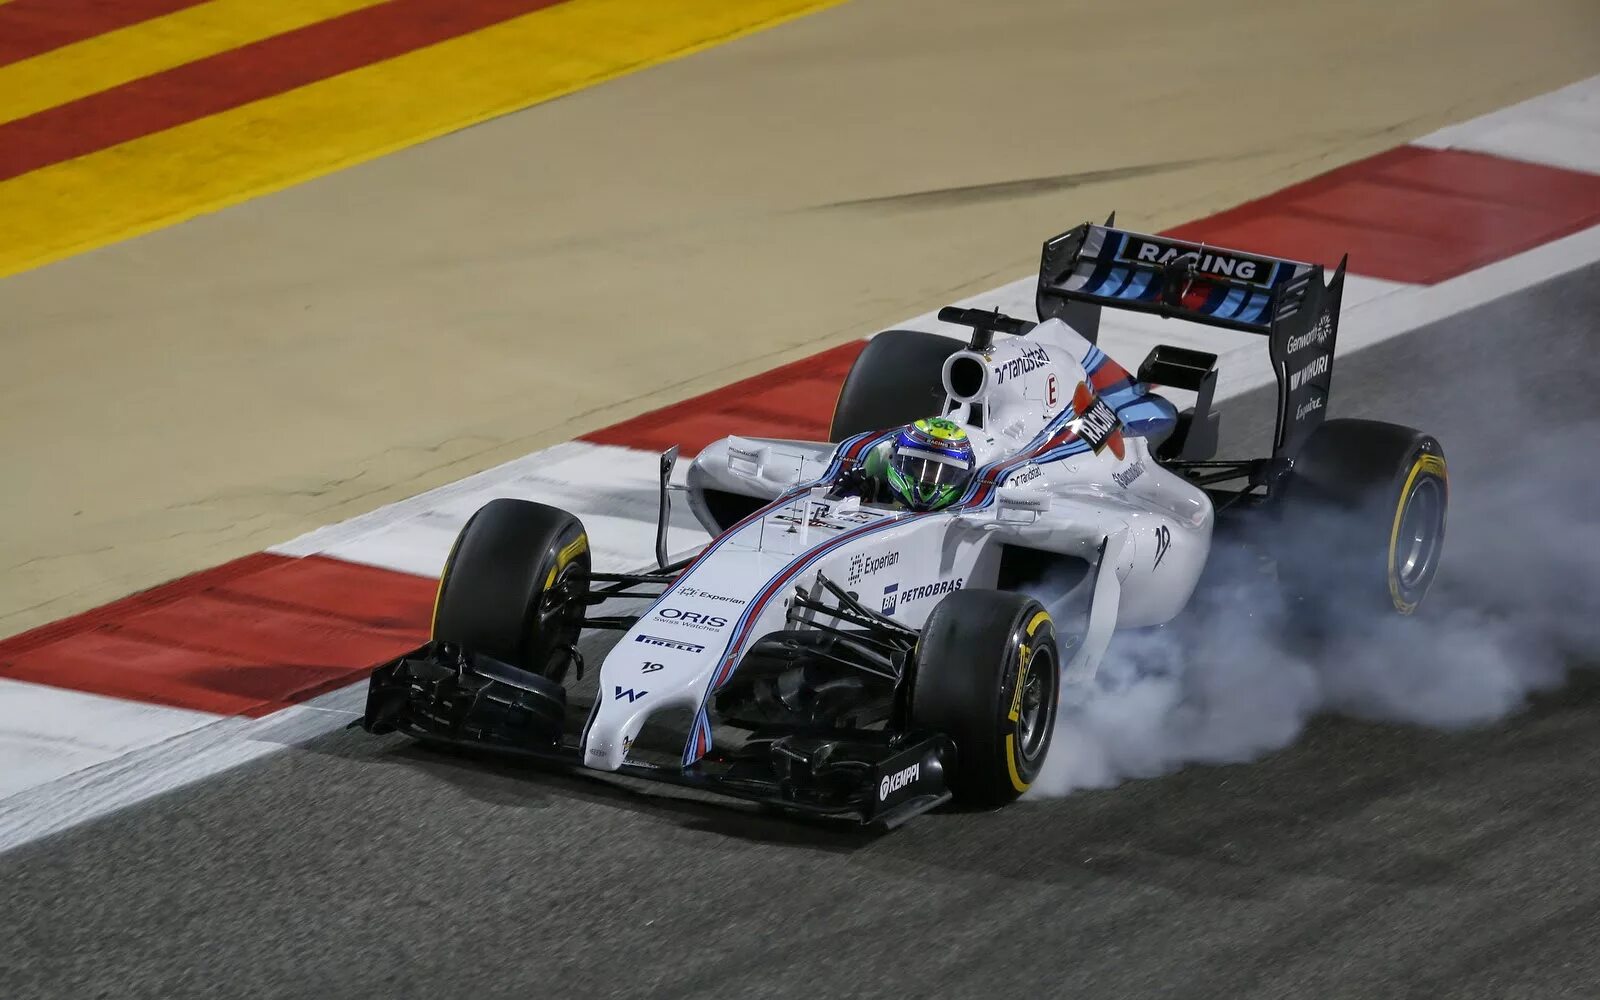 Вильямс 2014 ф1. F1 2014 Болиды. Williams fw36. Sauber f1 2014.